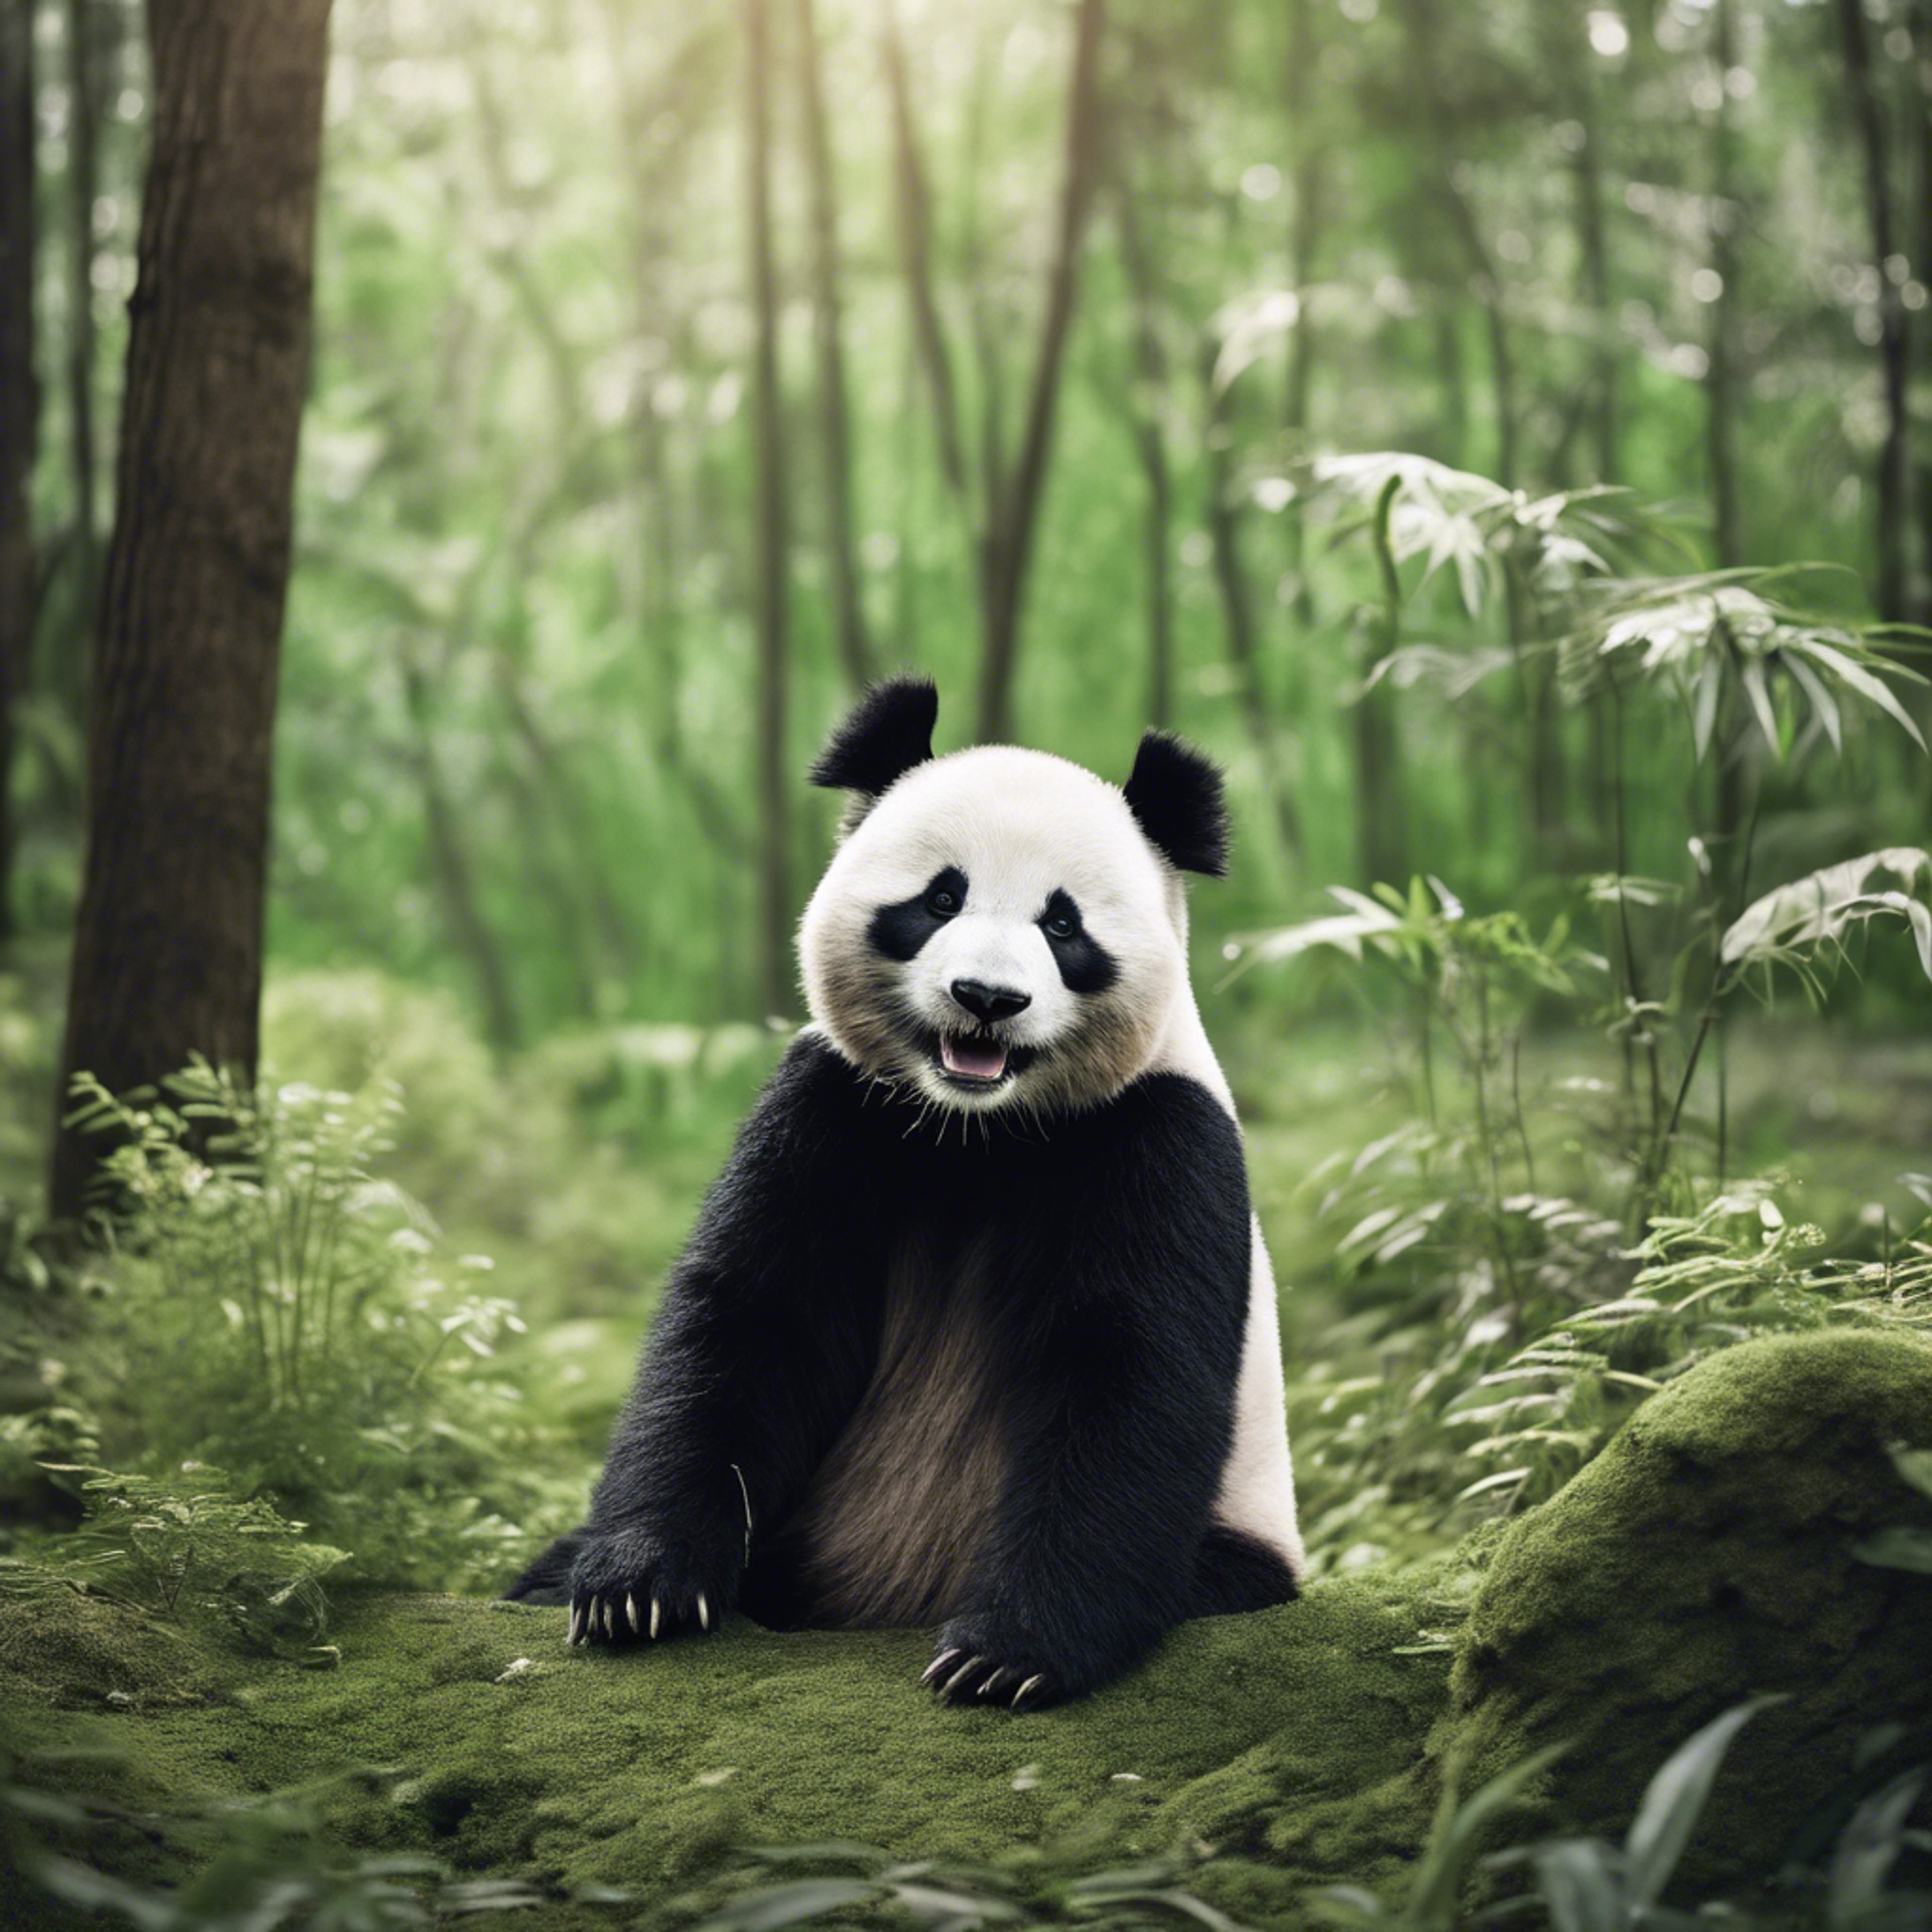 A laughing panda bear, celebrating a fun day in black, white and green wilderness.壁紙[a059d50594da43a98985]